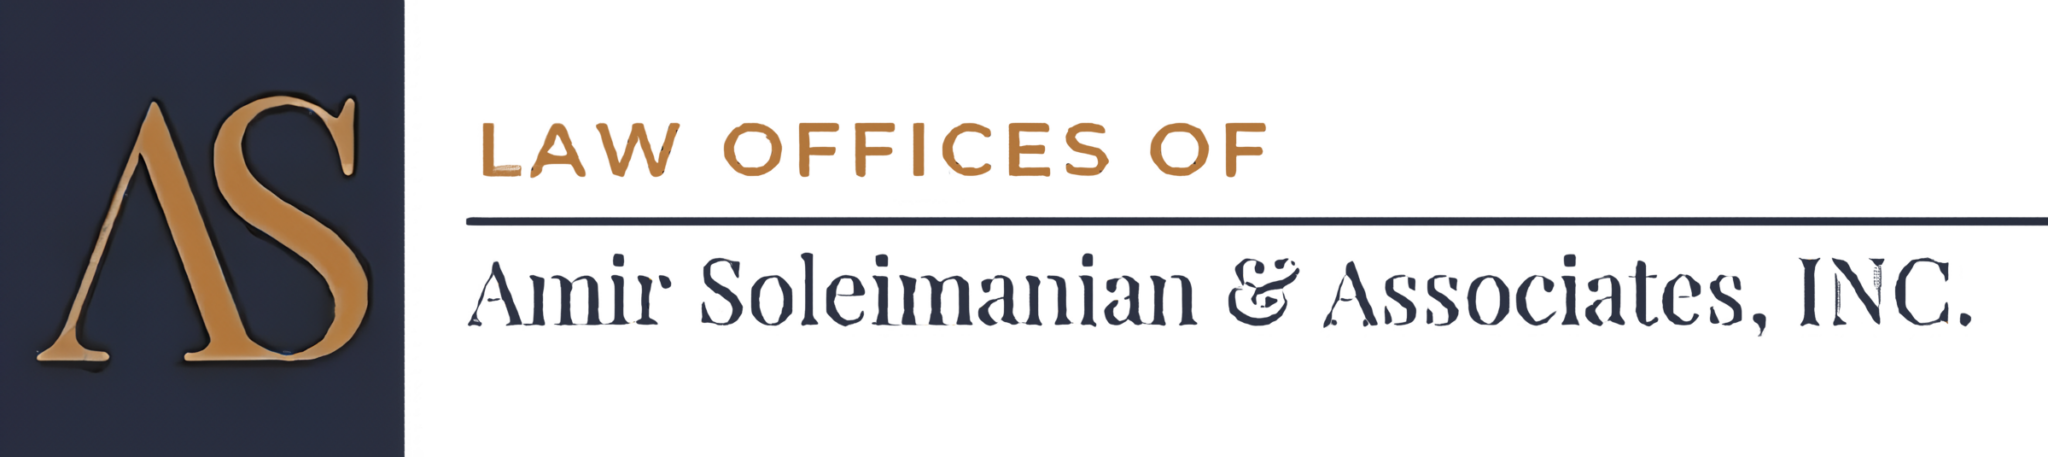 Mr.Ticket Law Offices of Amir Soleimanian & Associates, Inc.